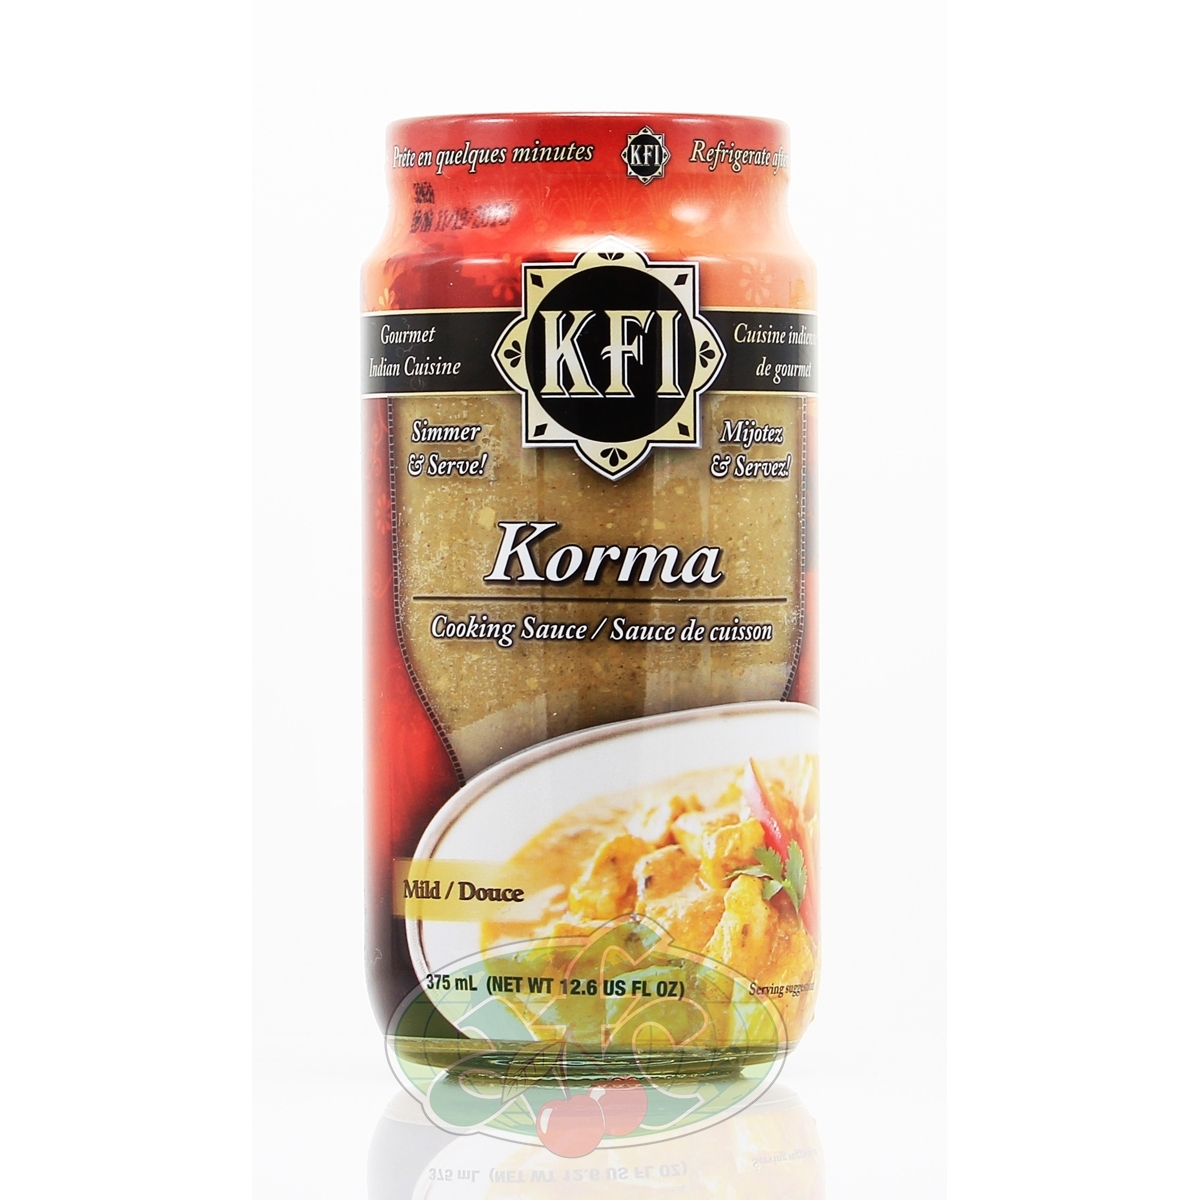 Kfi - Korma